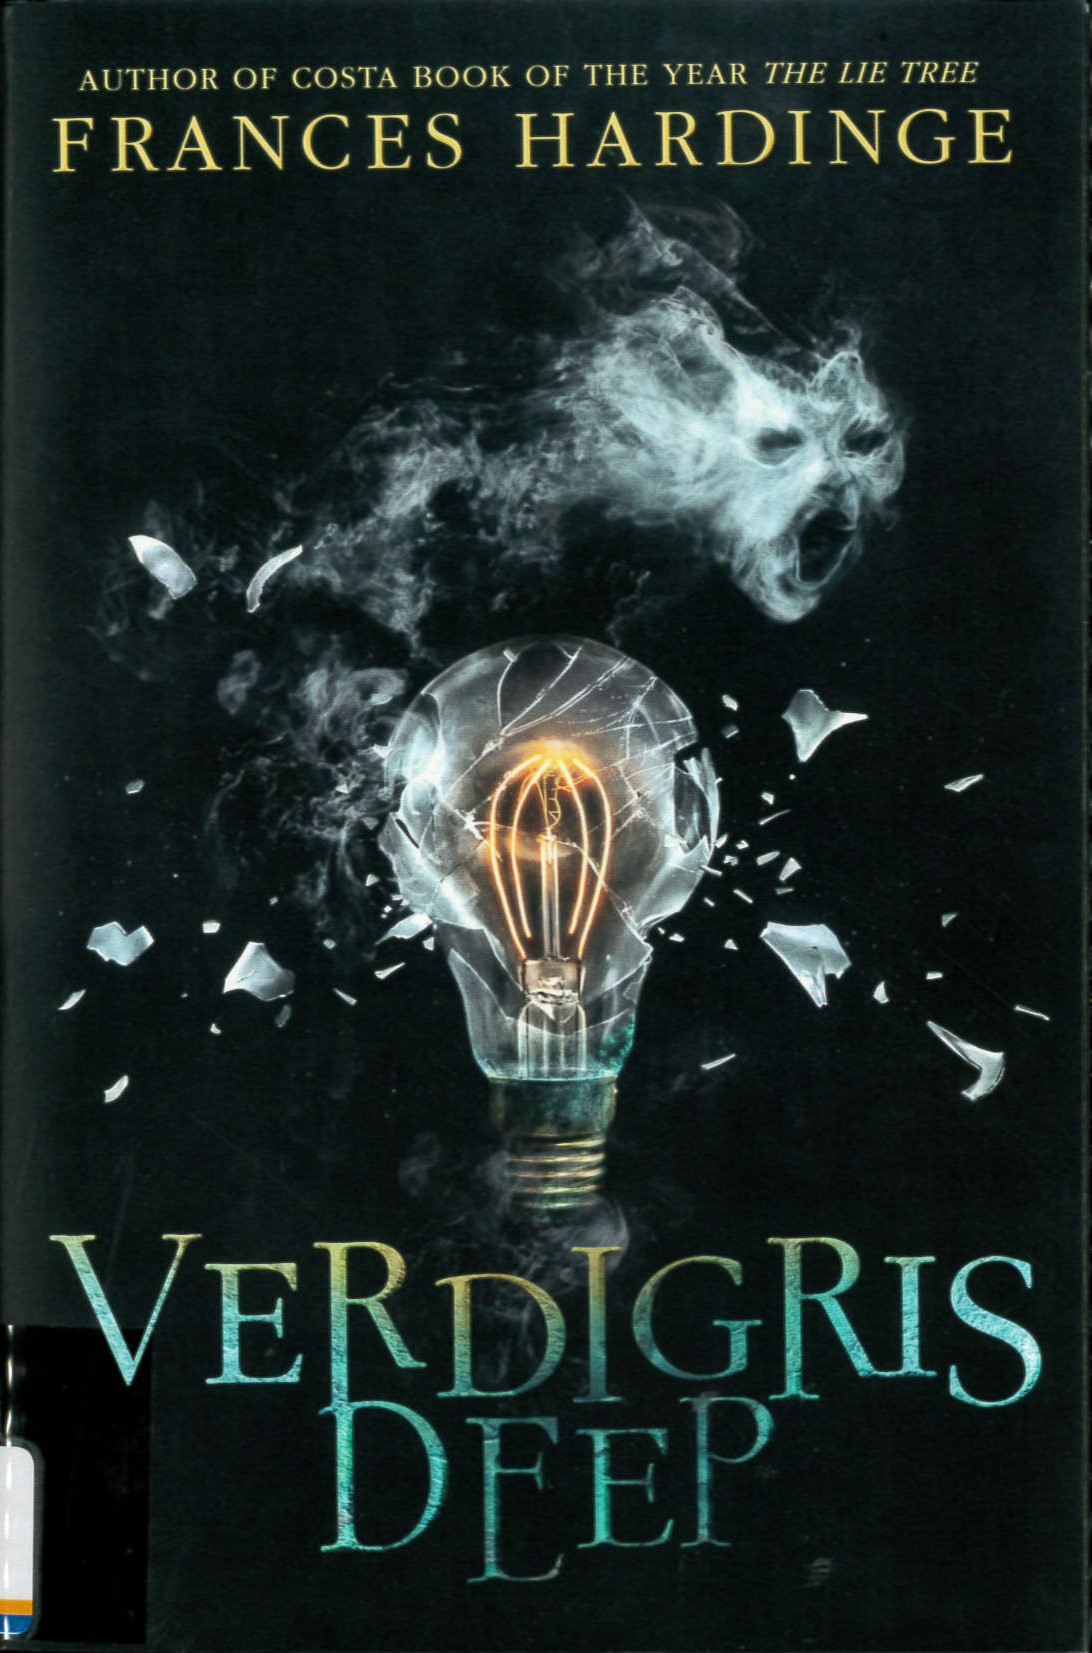 Verdigris deep /